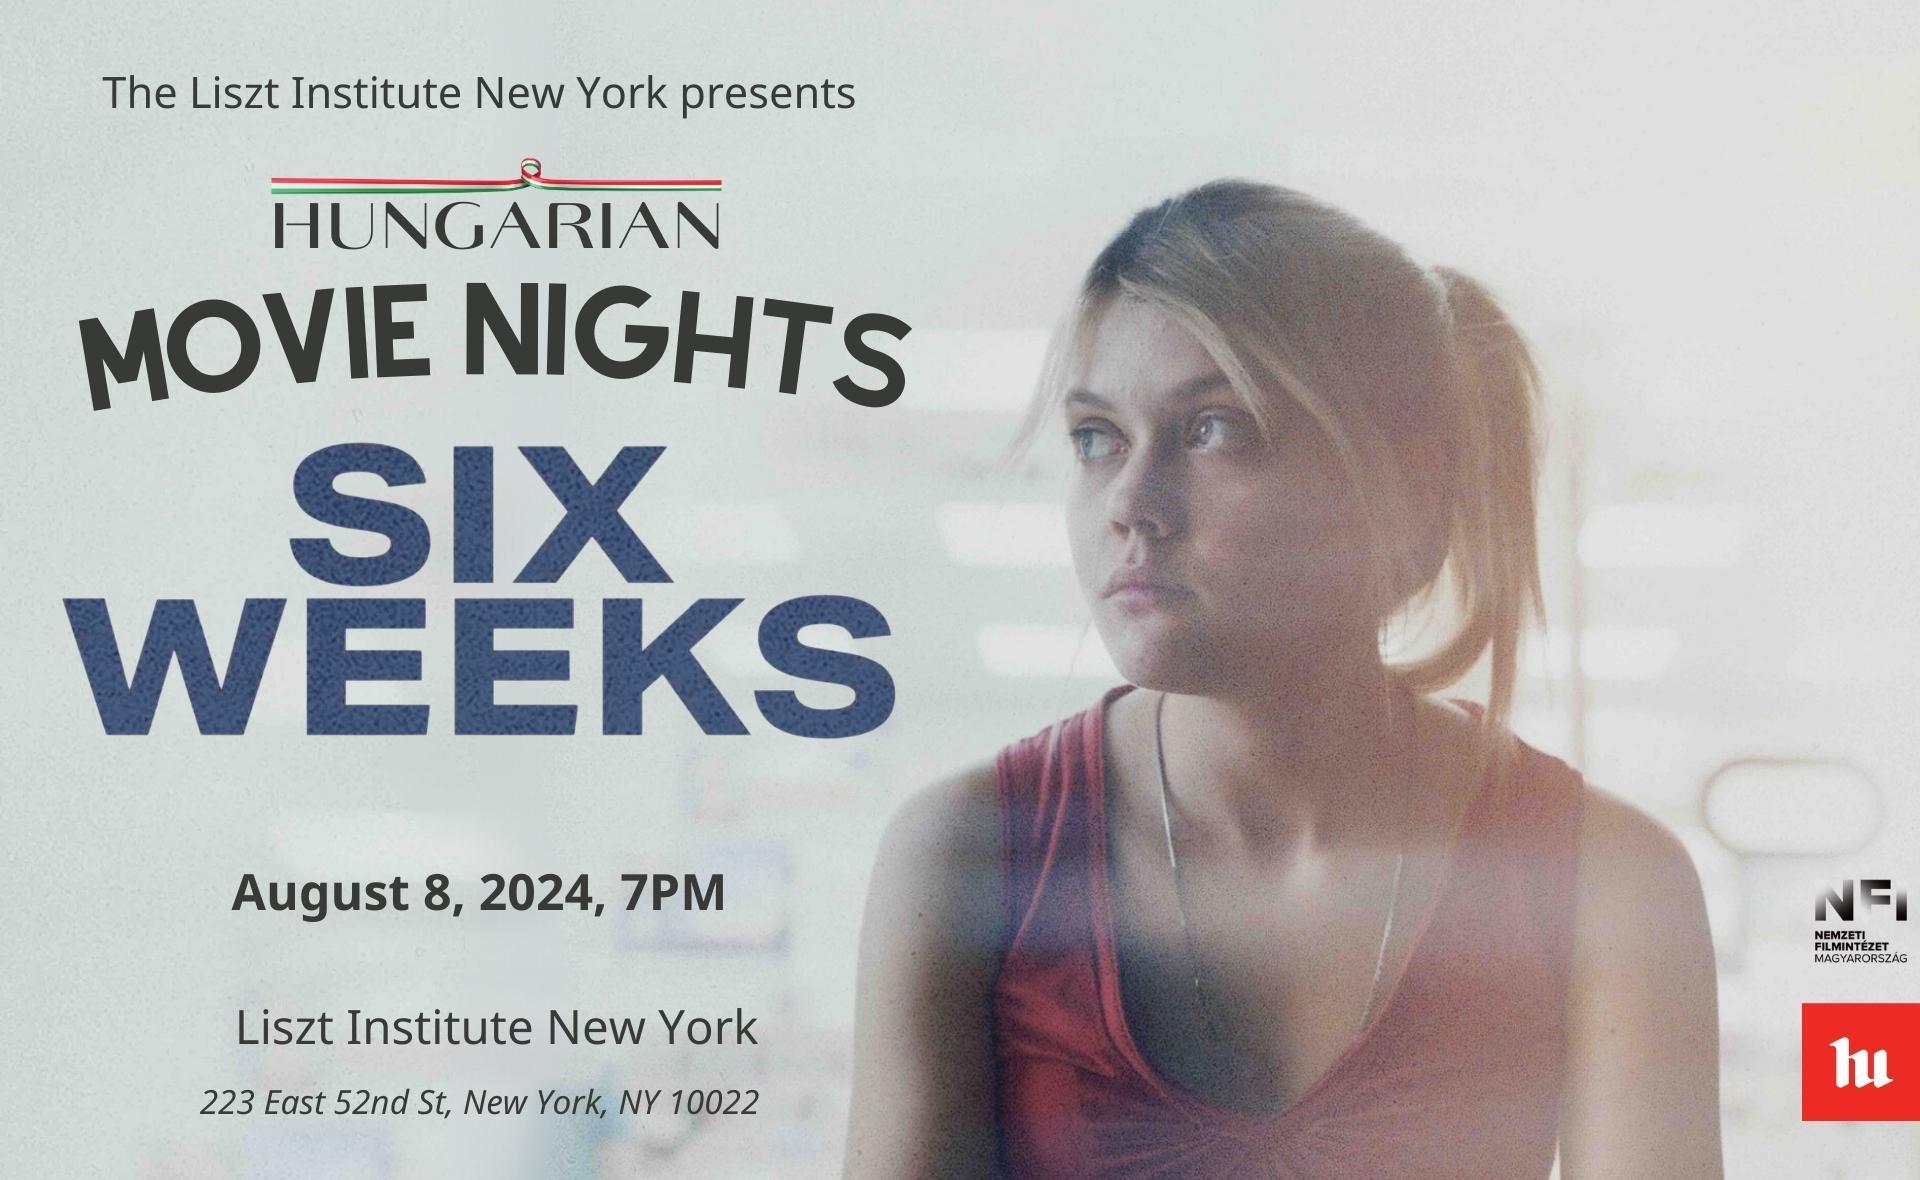 Hungarian Movie Nights - Six Weeks